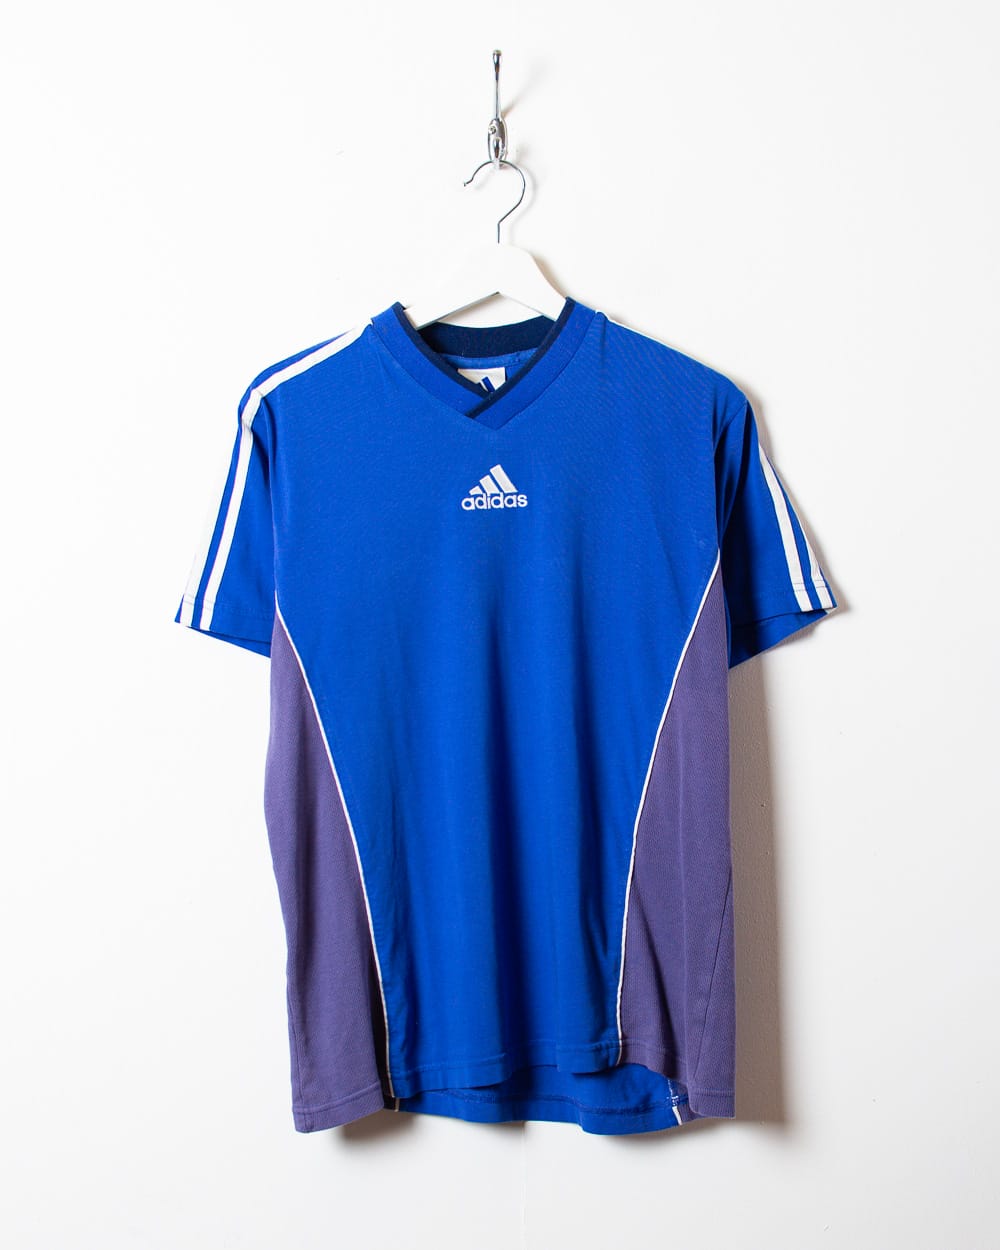 Blue Adidas T-Shirt - Small